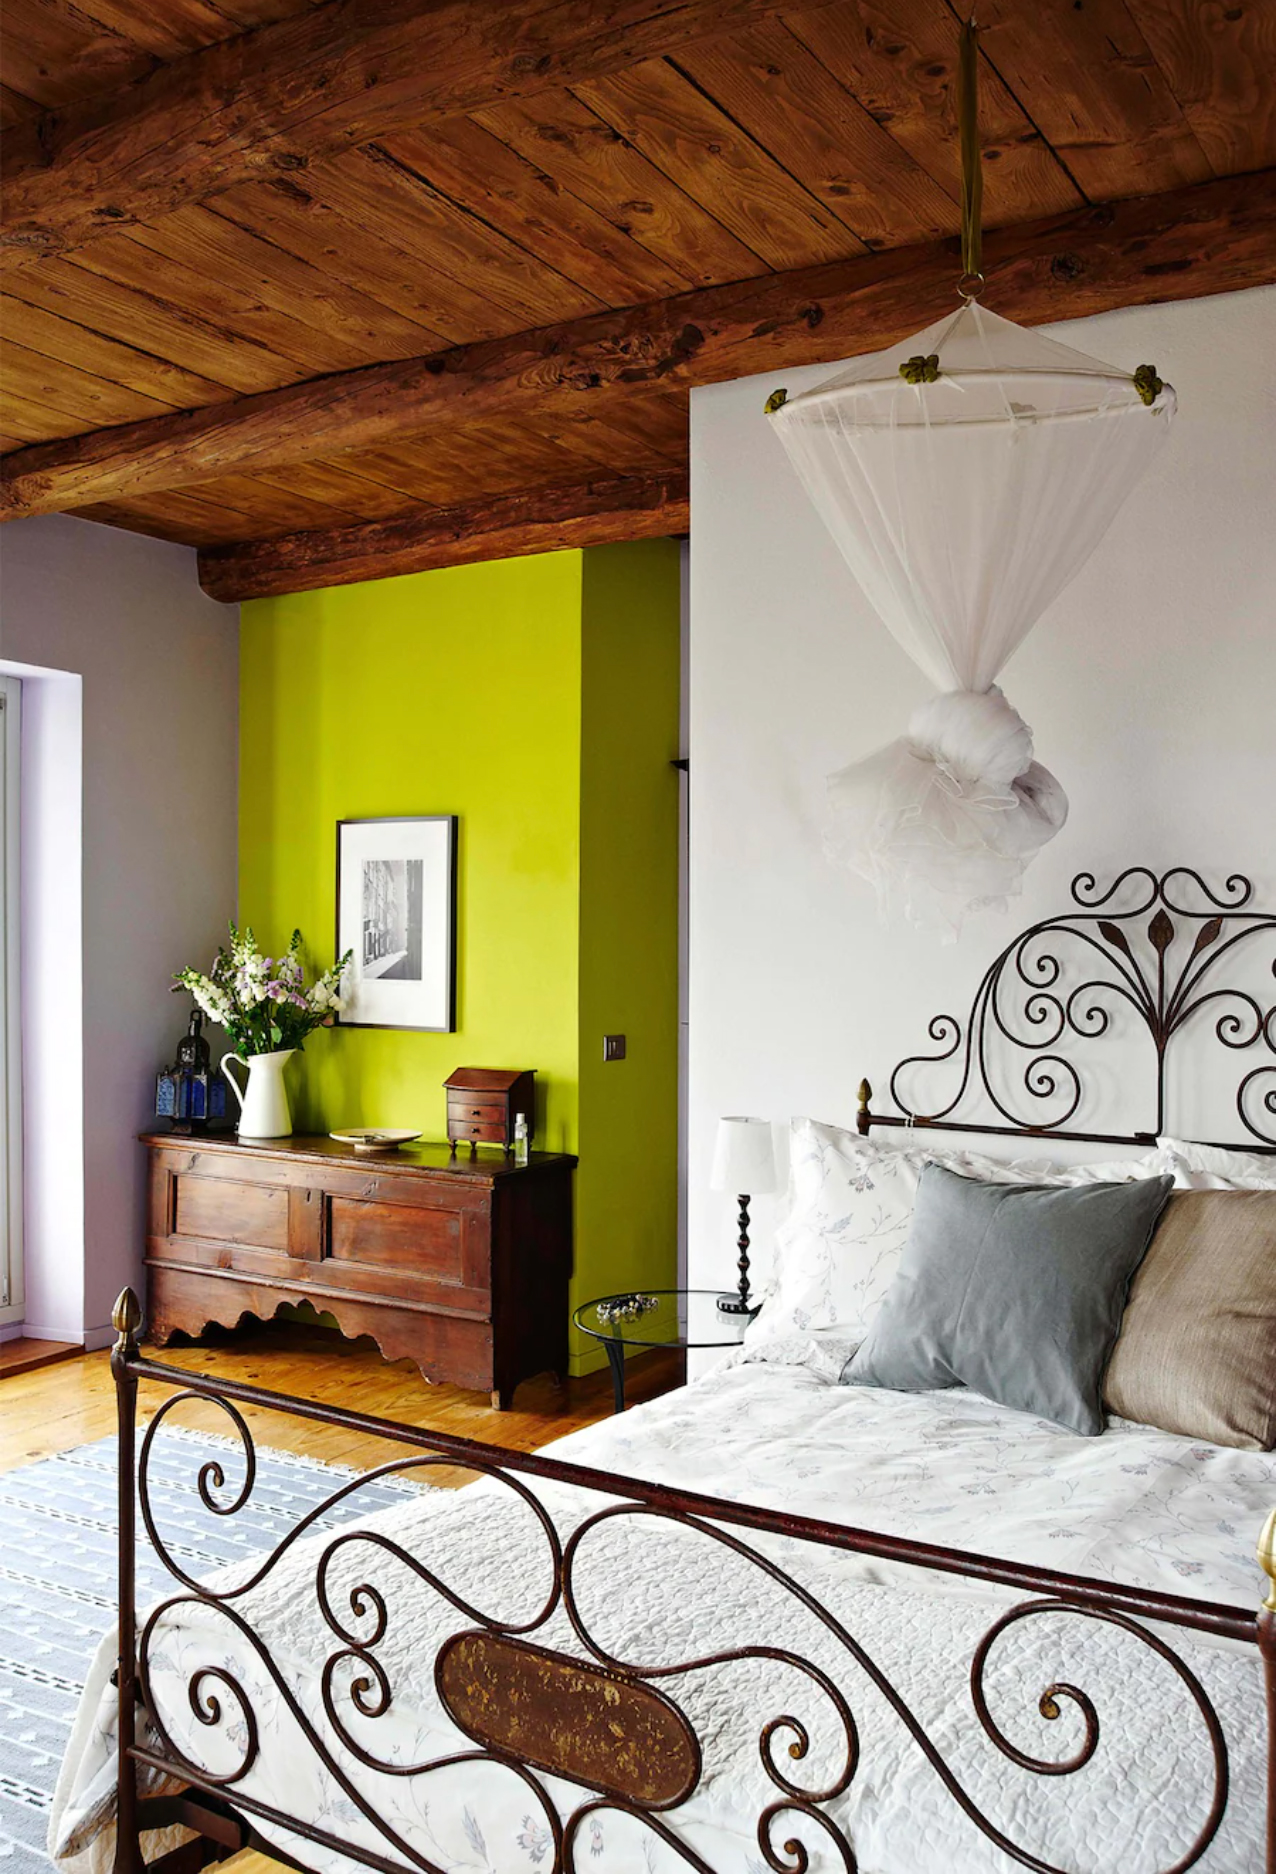 Rustic bedroom with wooden beams